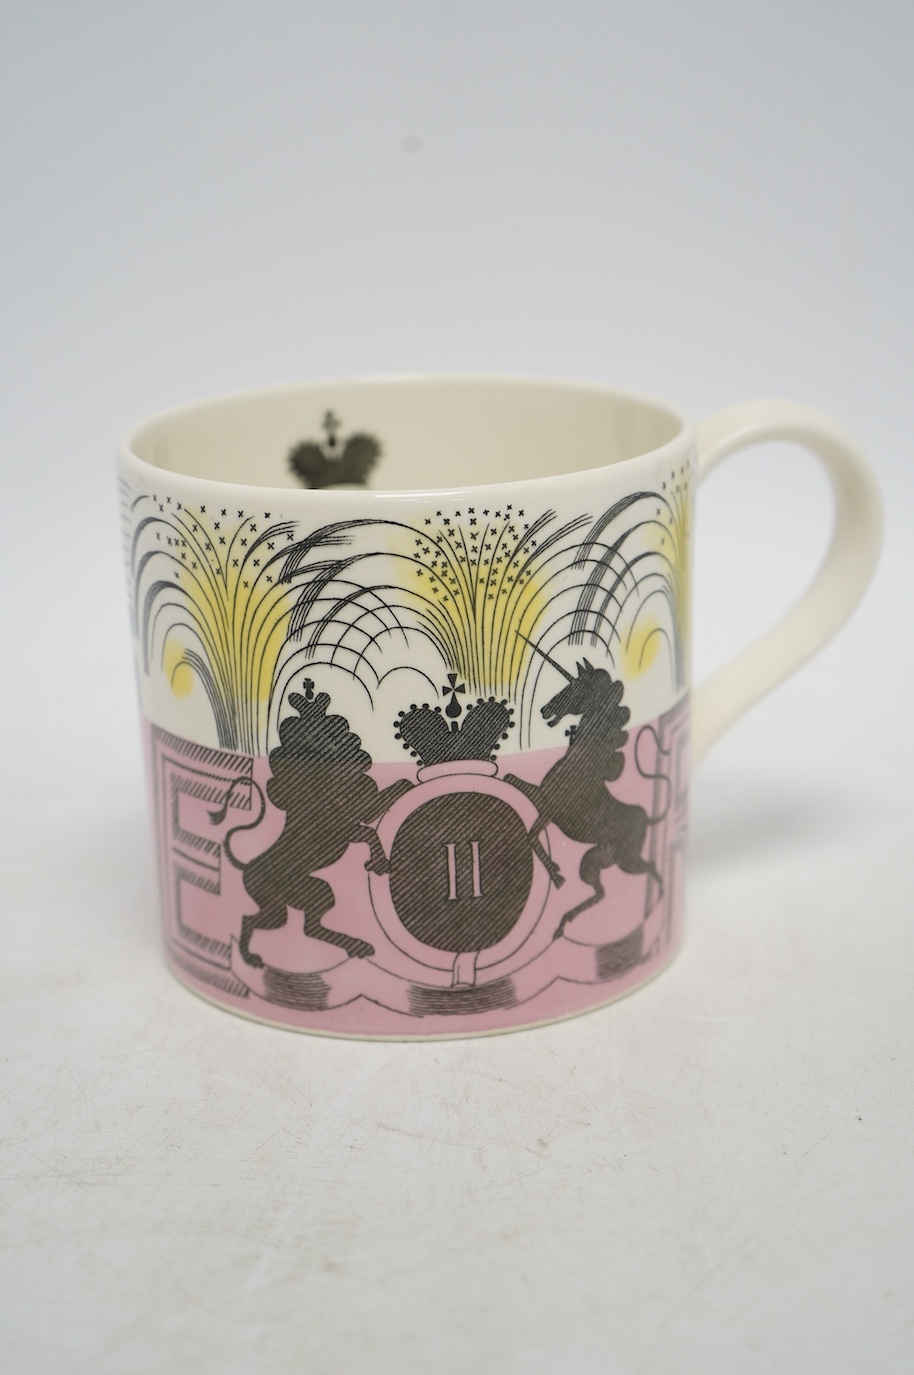 Eric Ravilious for Wedgwood, a 1953 Coronation mug, 10.5cm high, together with a Laura Knight coronation mug. Condition - fair to good